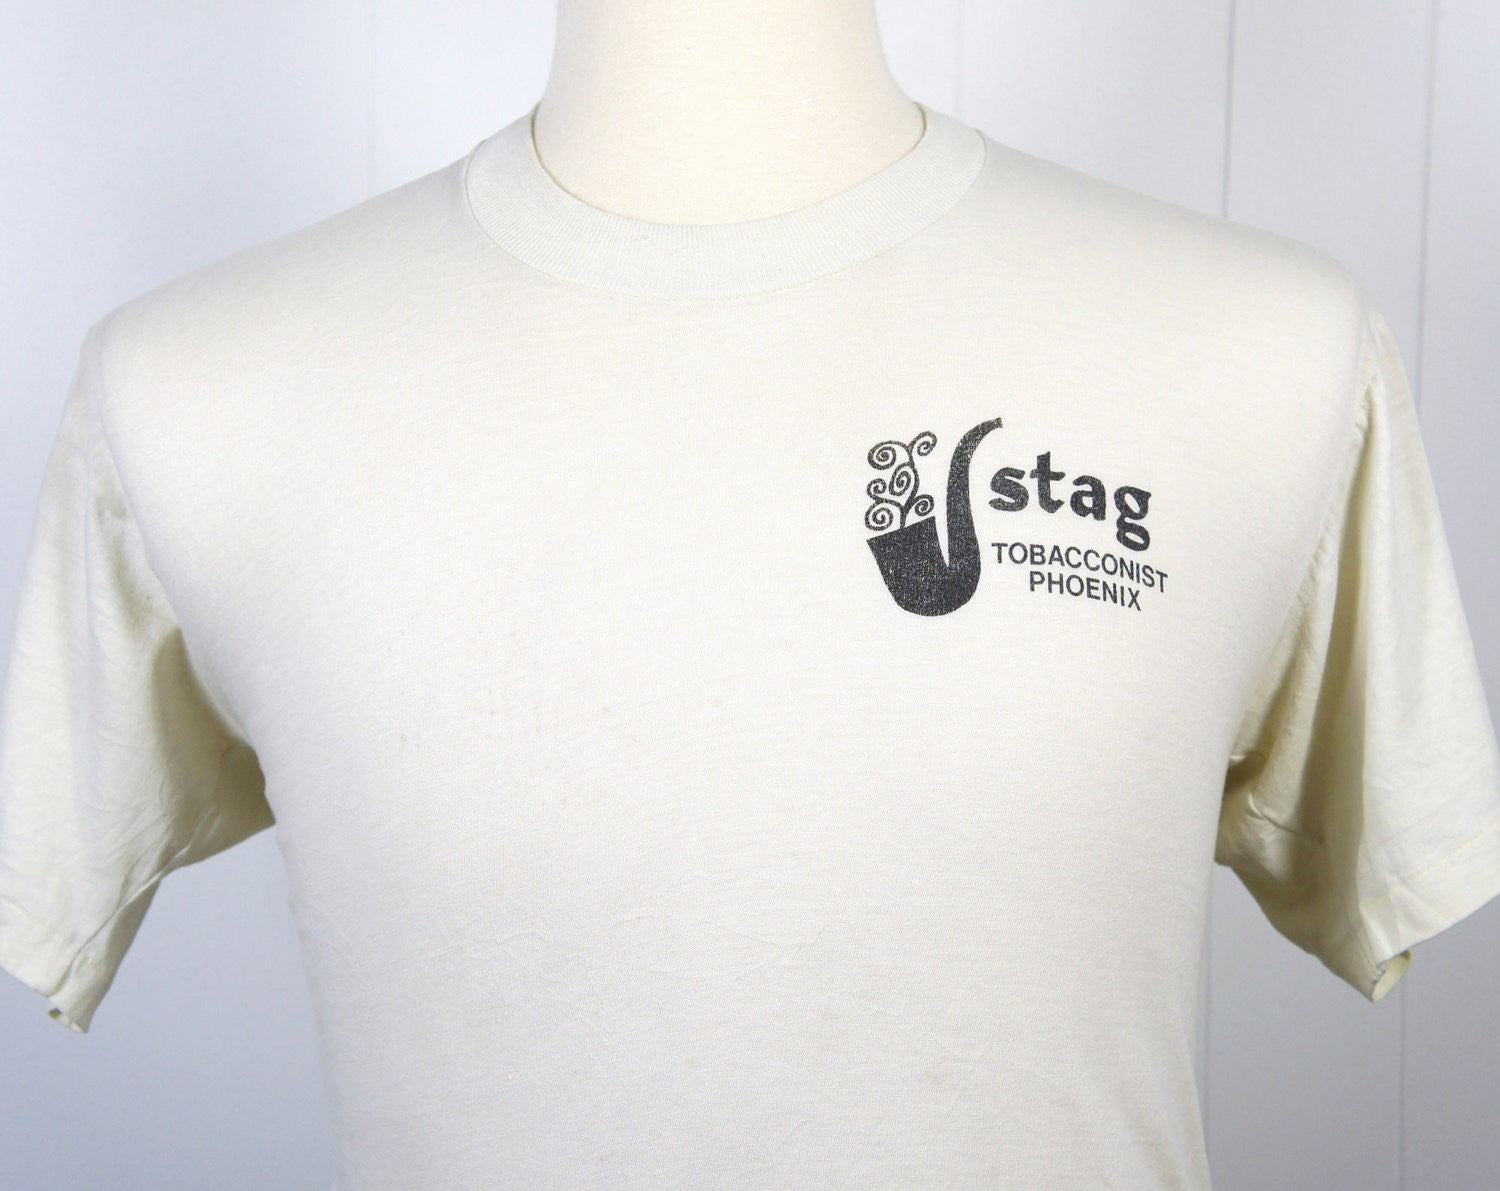 1970's Stag Tobbaconist T-Shirt - Phoenix, AZ, Size M